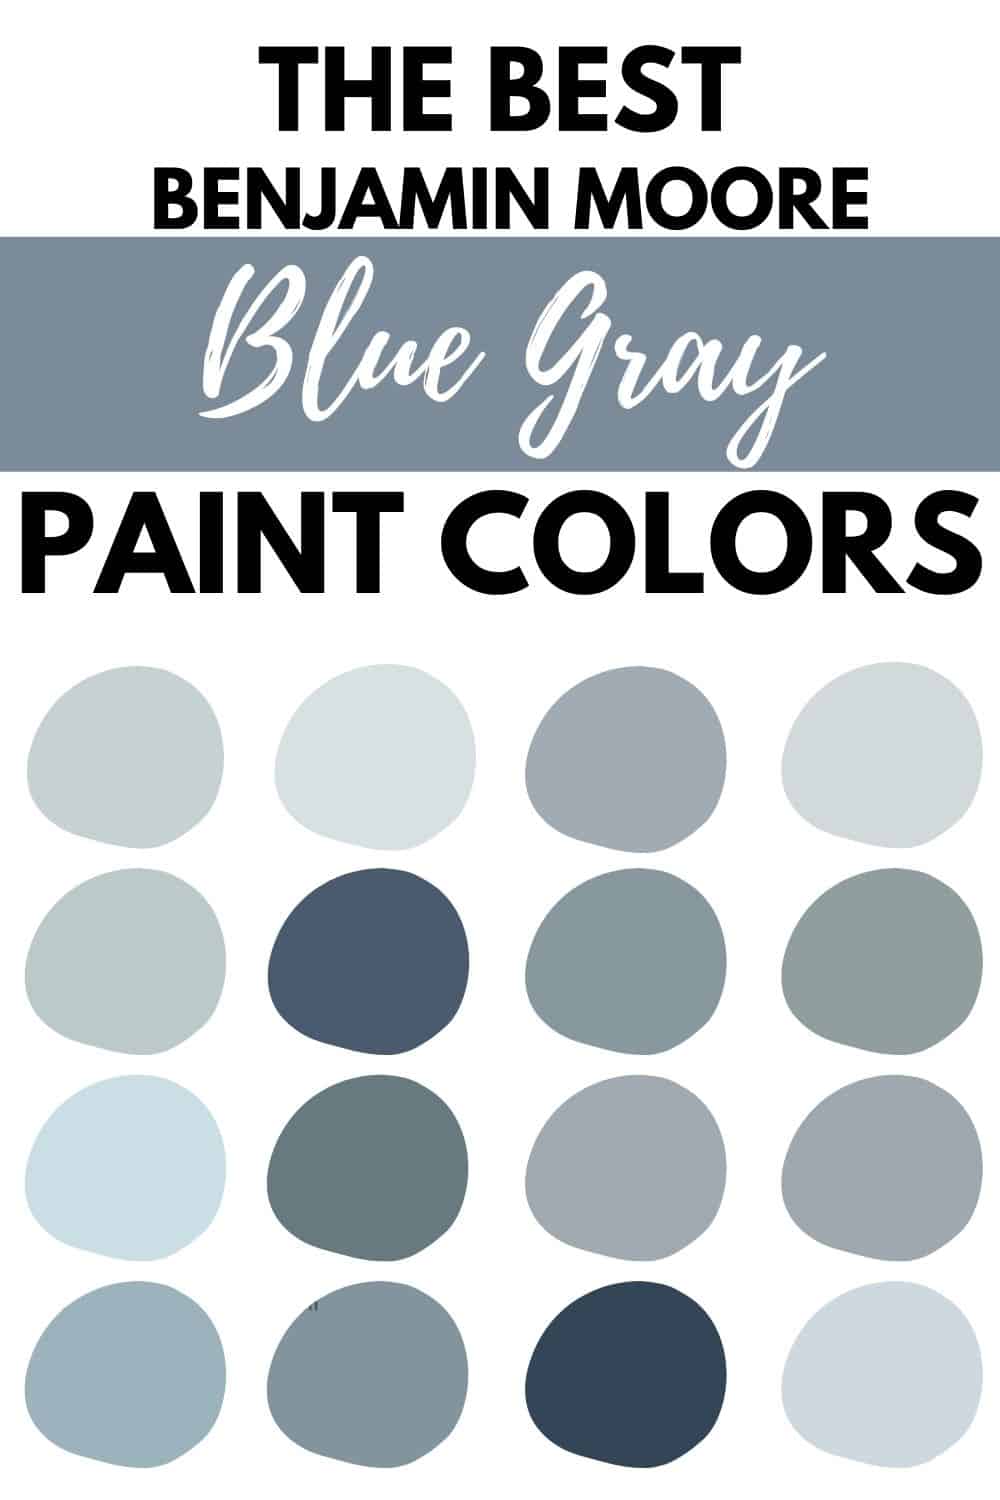 The Absolute Best Blue Gray Paint Colors Greenarchite - vrogue.co